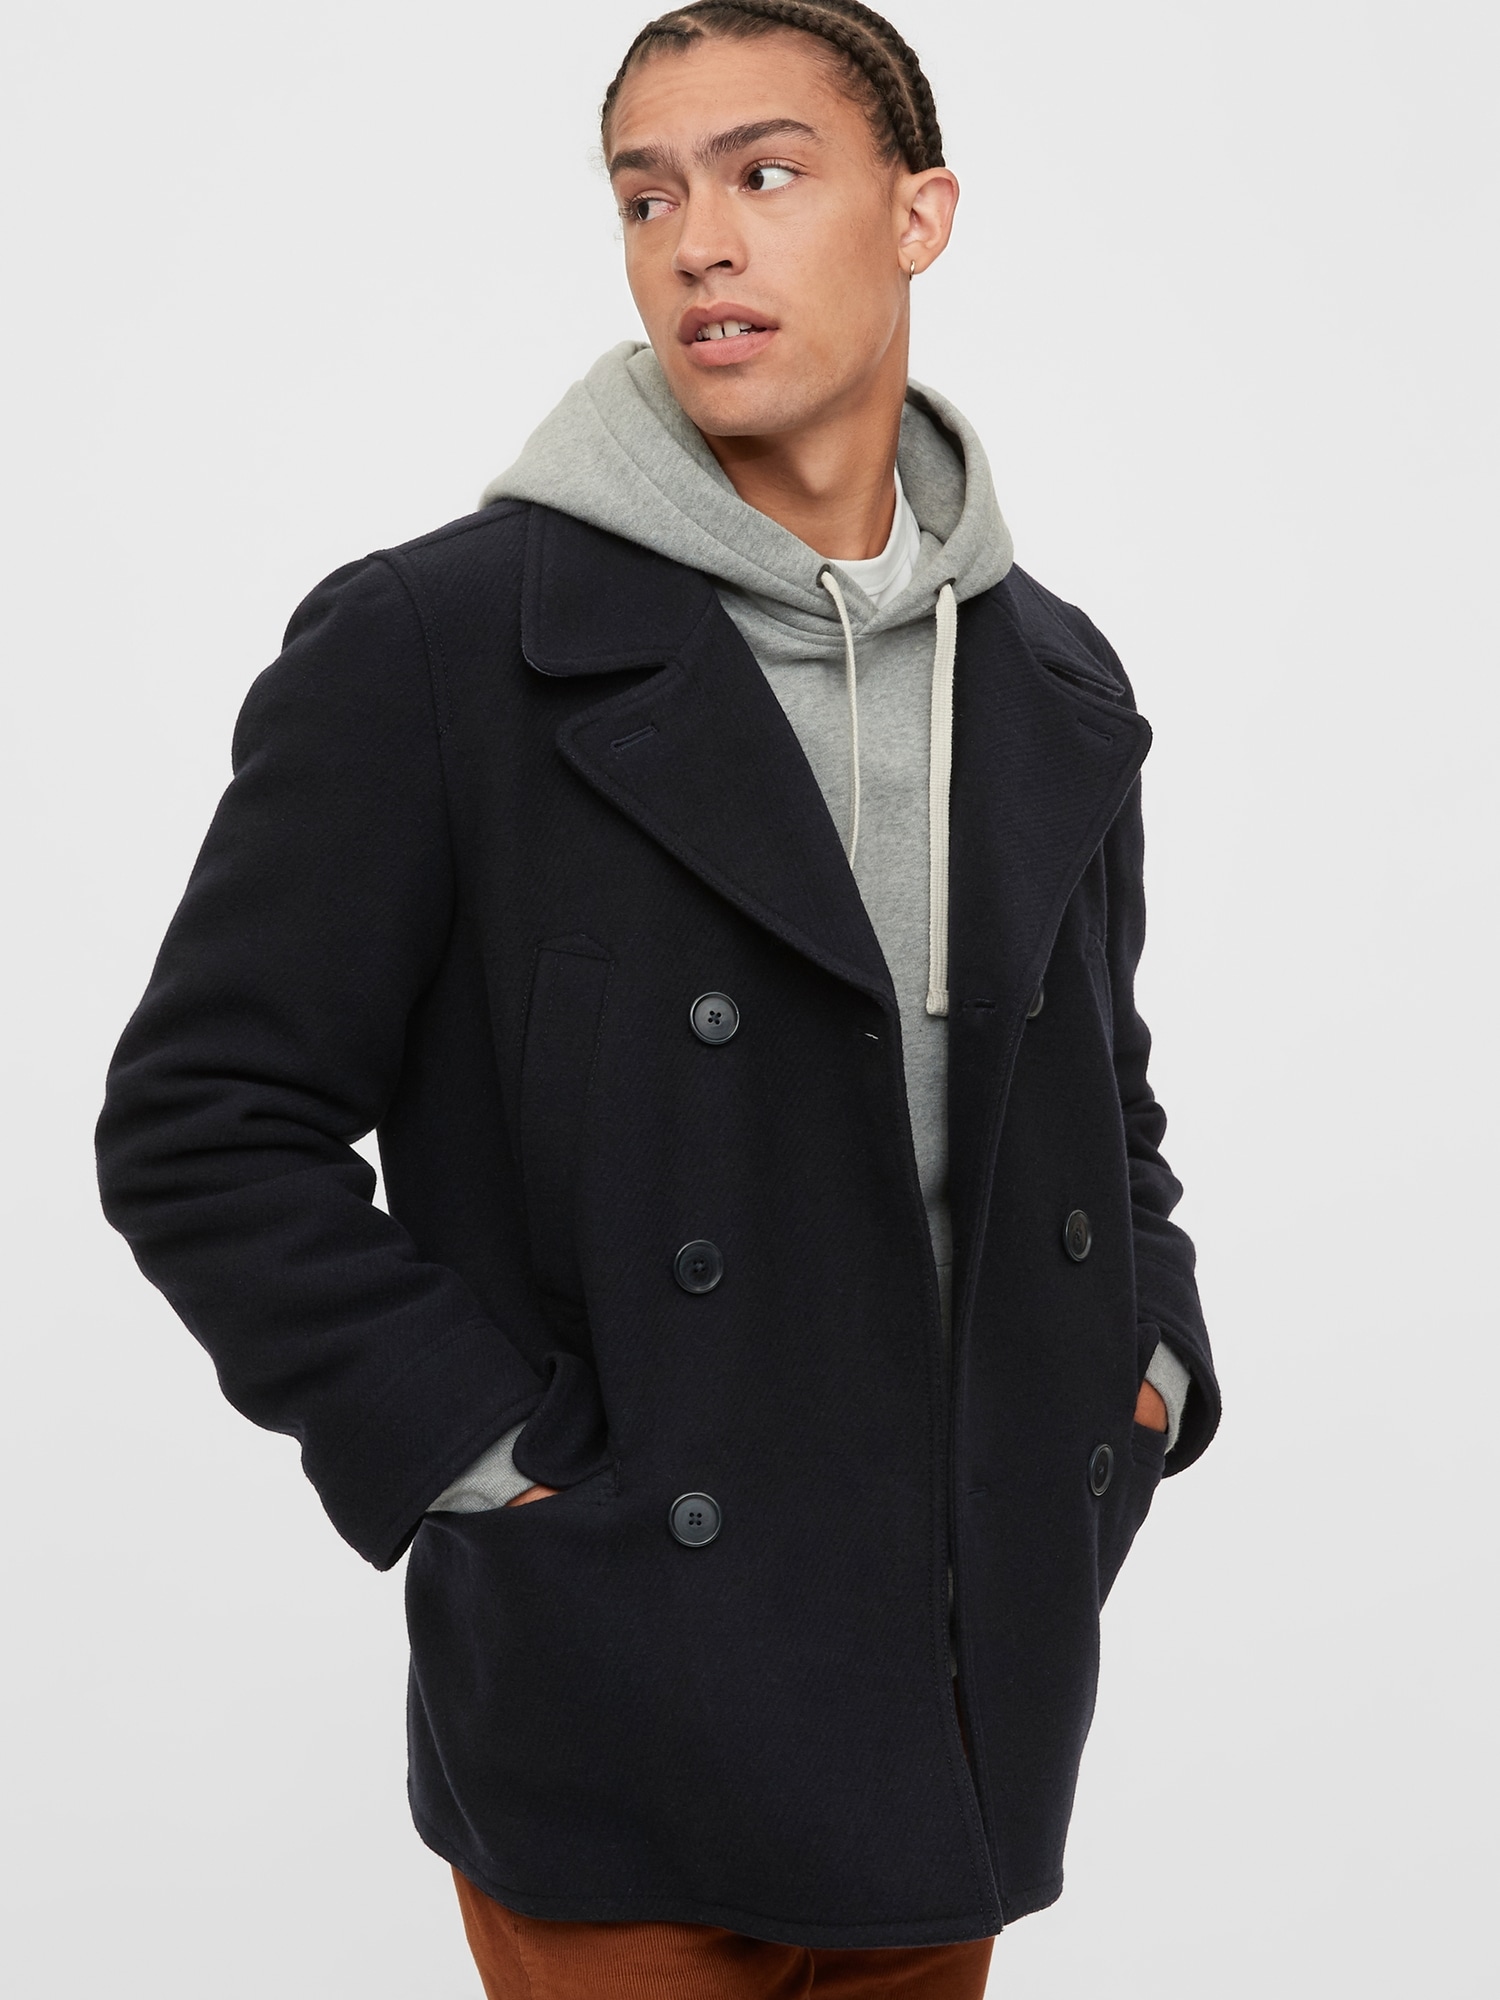 gap men's wool jacket